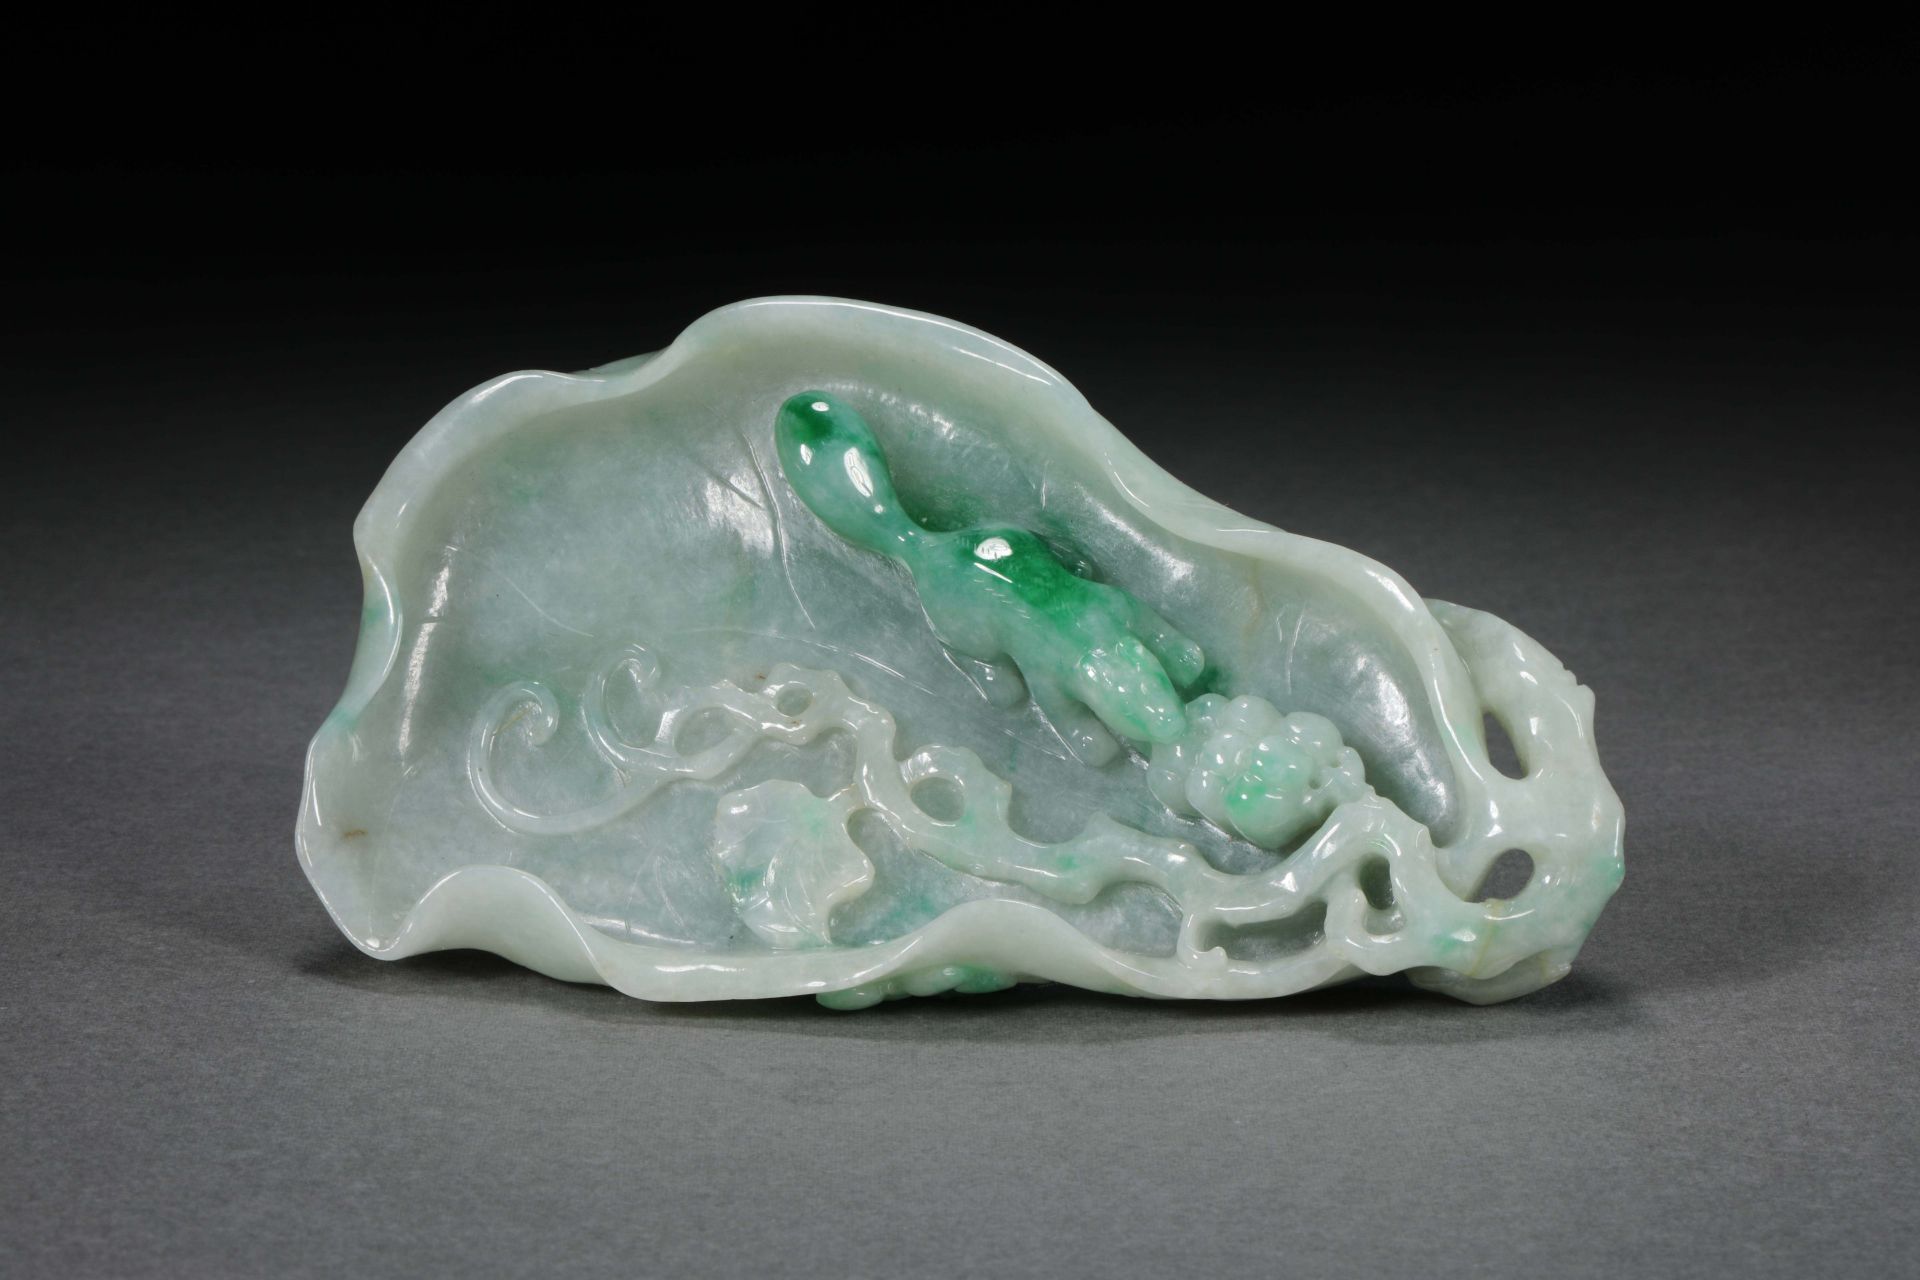 Qing dynasty jadeite pen wash - Image 2 of 10